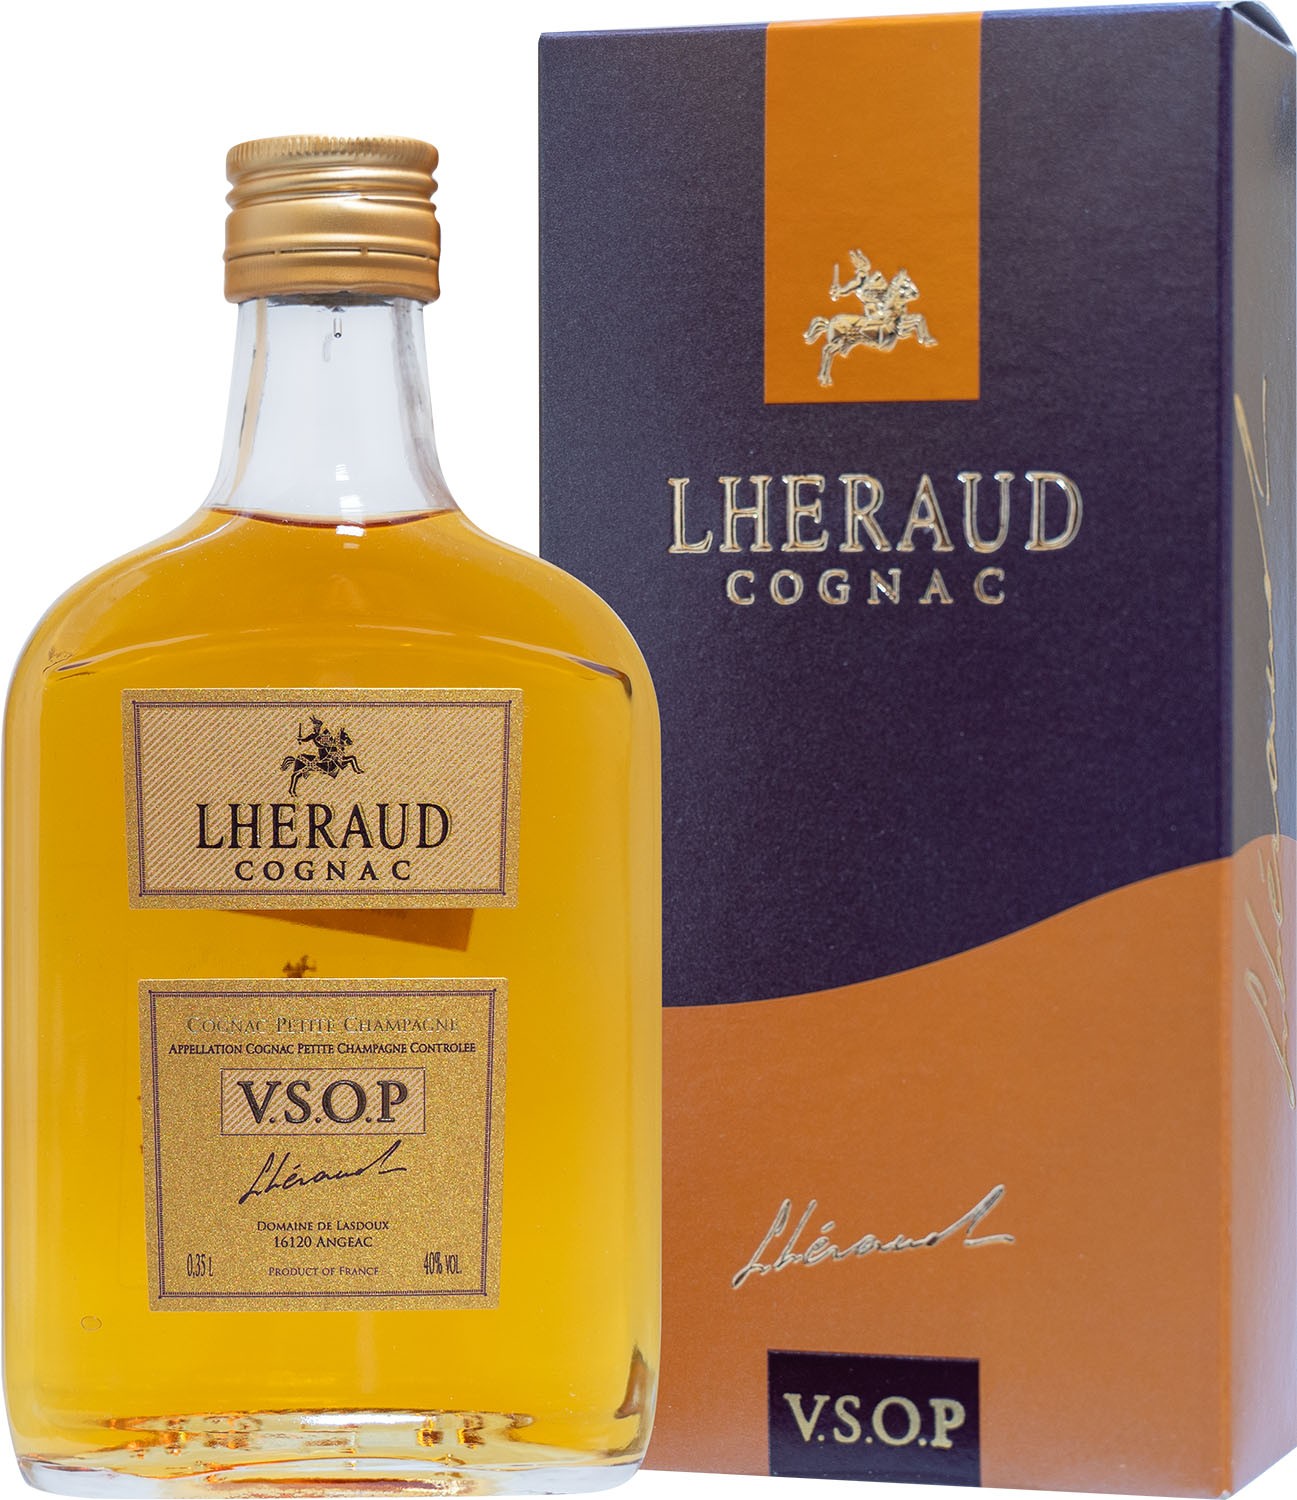 Lheraud Cognac VSOP 350ML